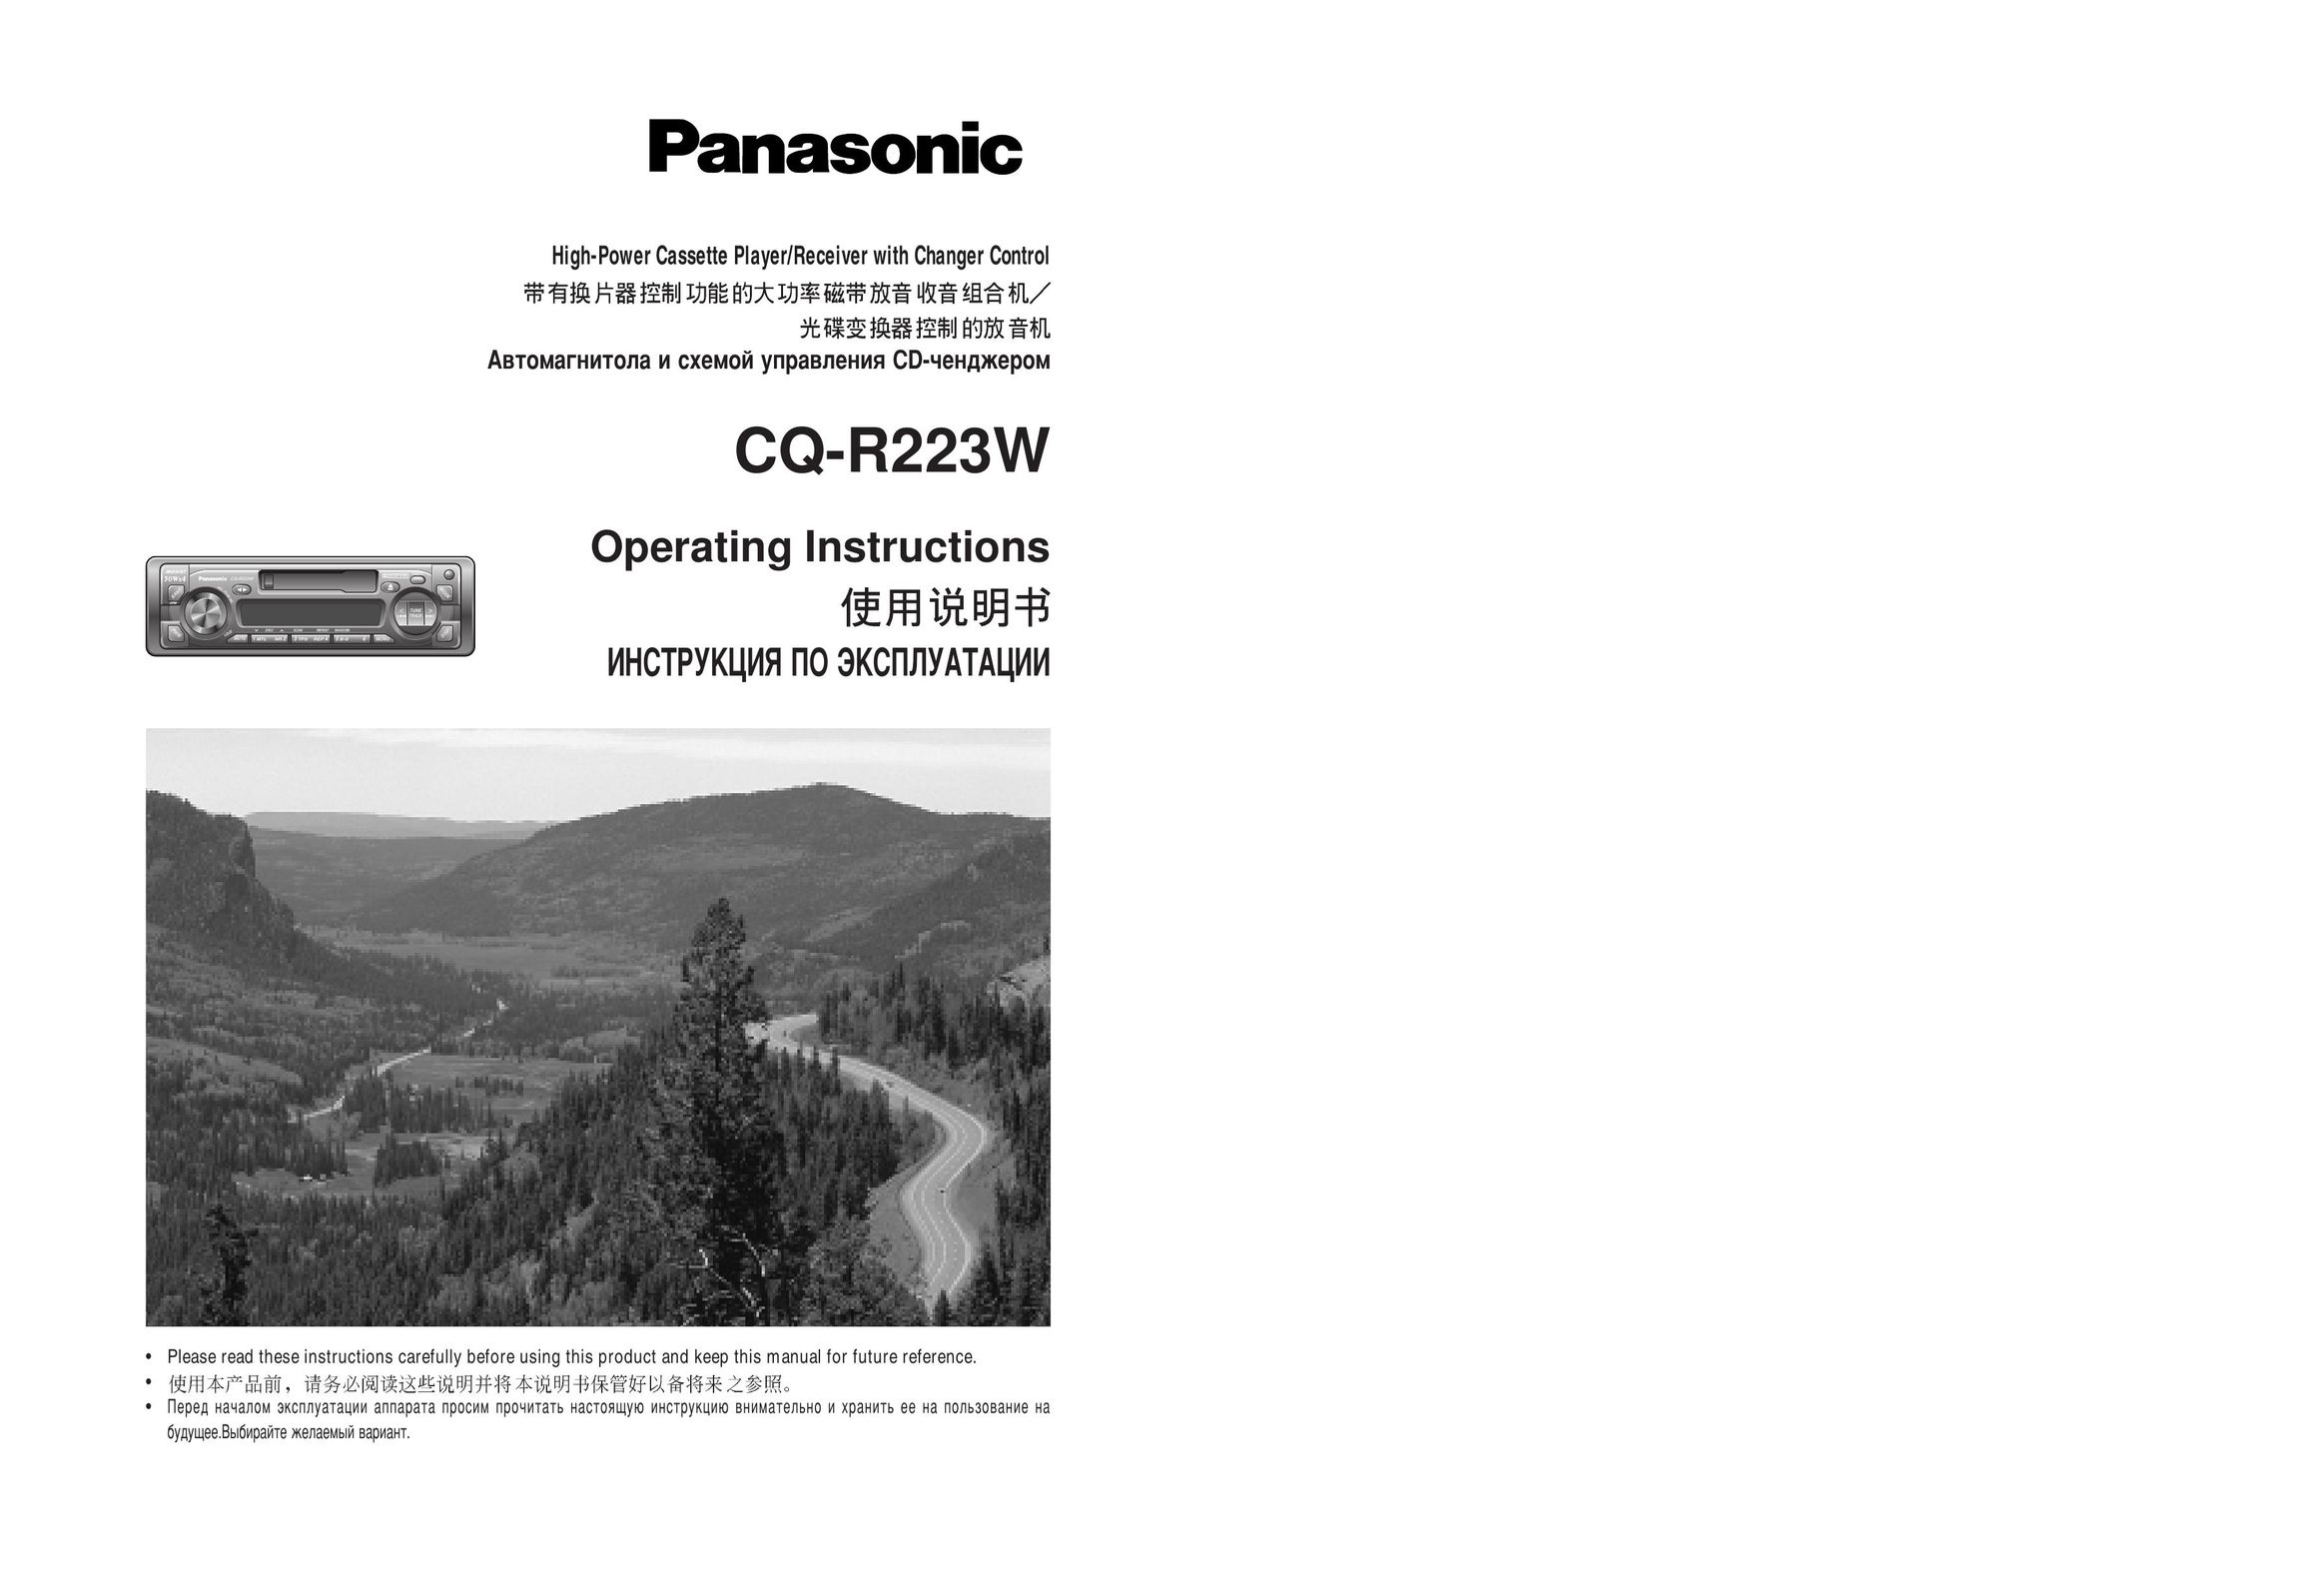 Panasonic CQ-R223W Cassette Player User Manual